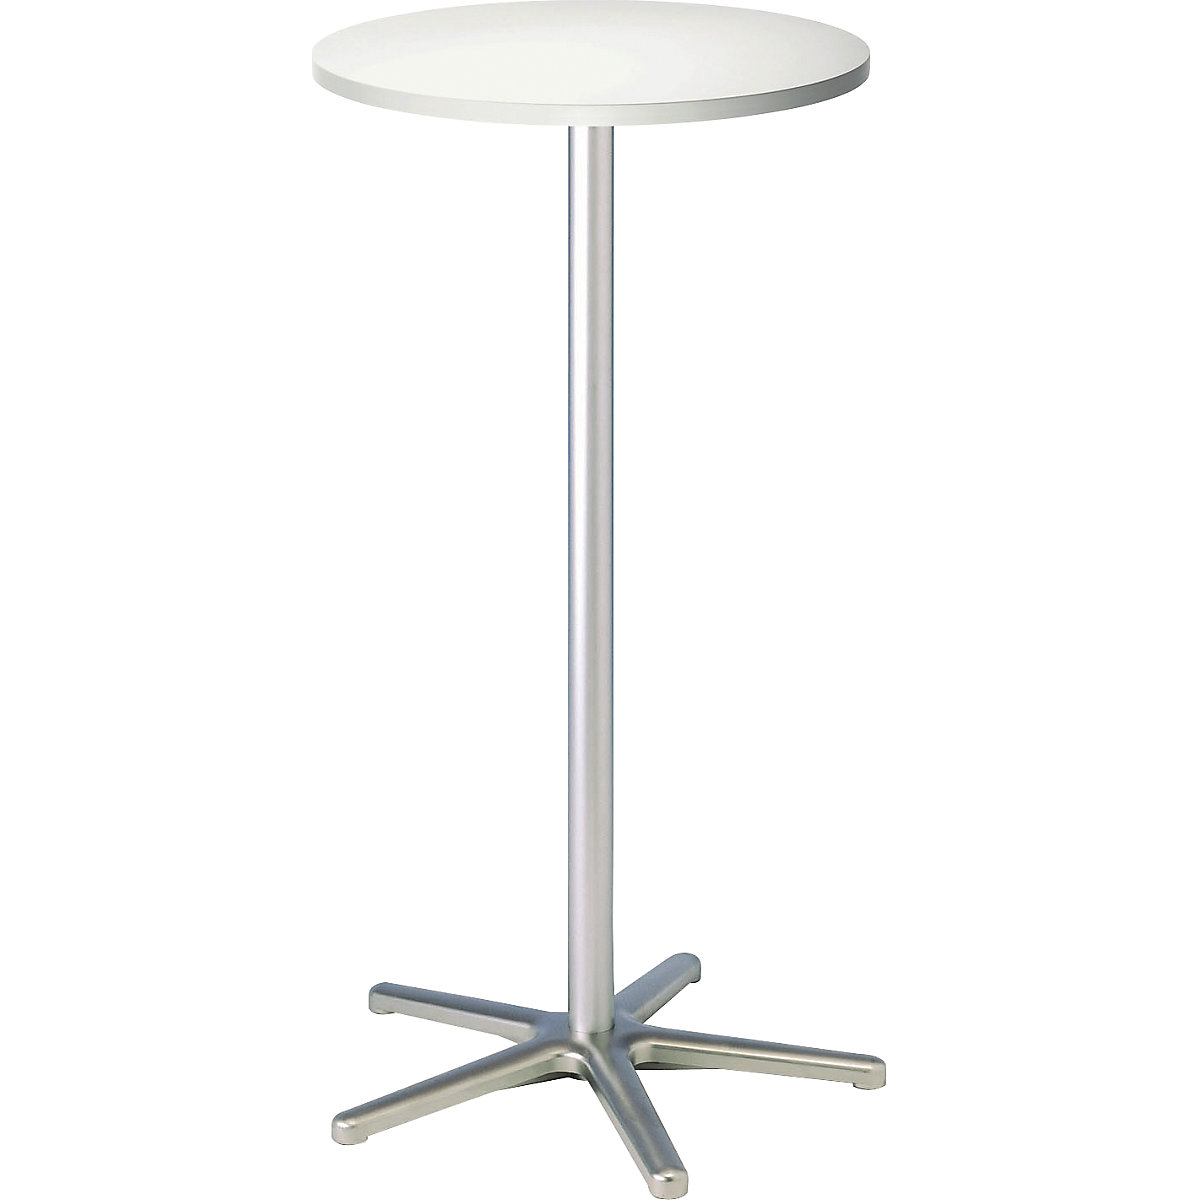 Visoka miza, Ø 600 mm – MAUL, višina 1100 mm, srebrno ogrodje, plošča bele barve-3